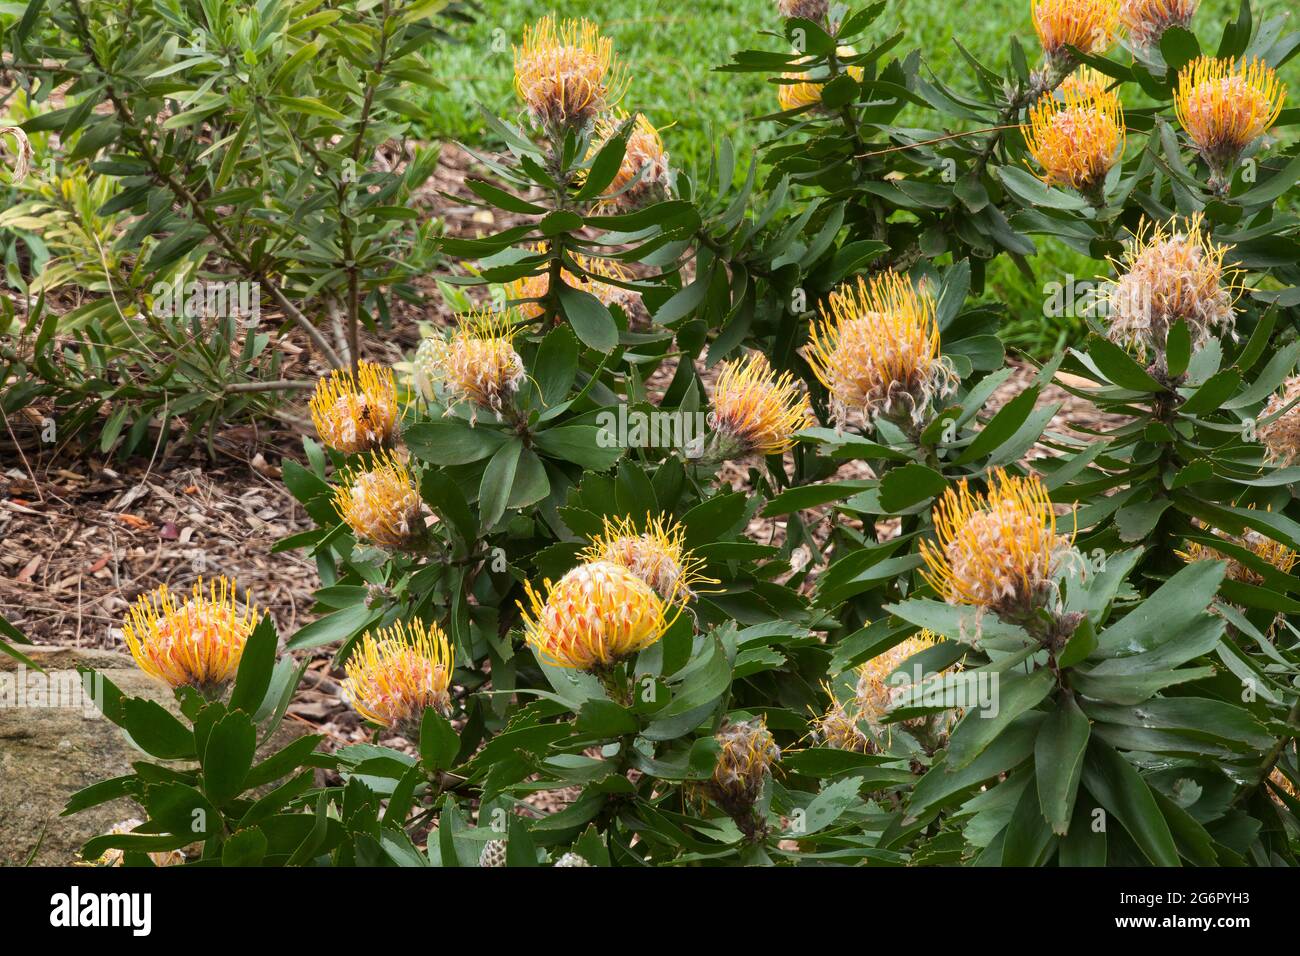 Sydney Australia, flowering leucospermum x cuneiforme "carnival orange" shrub native to south africa Stock Photo